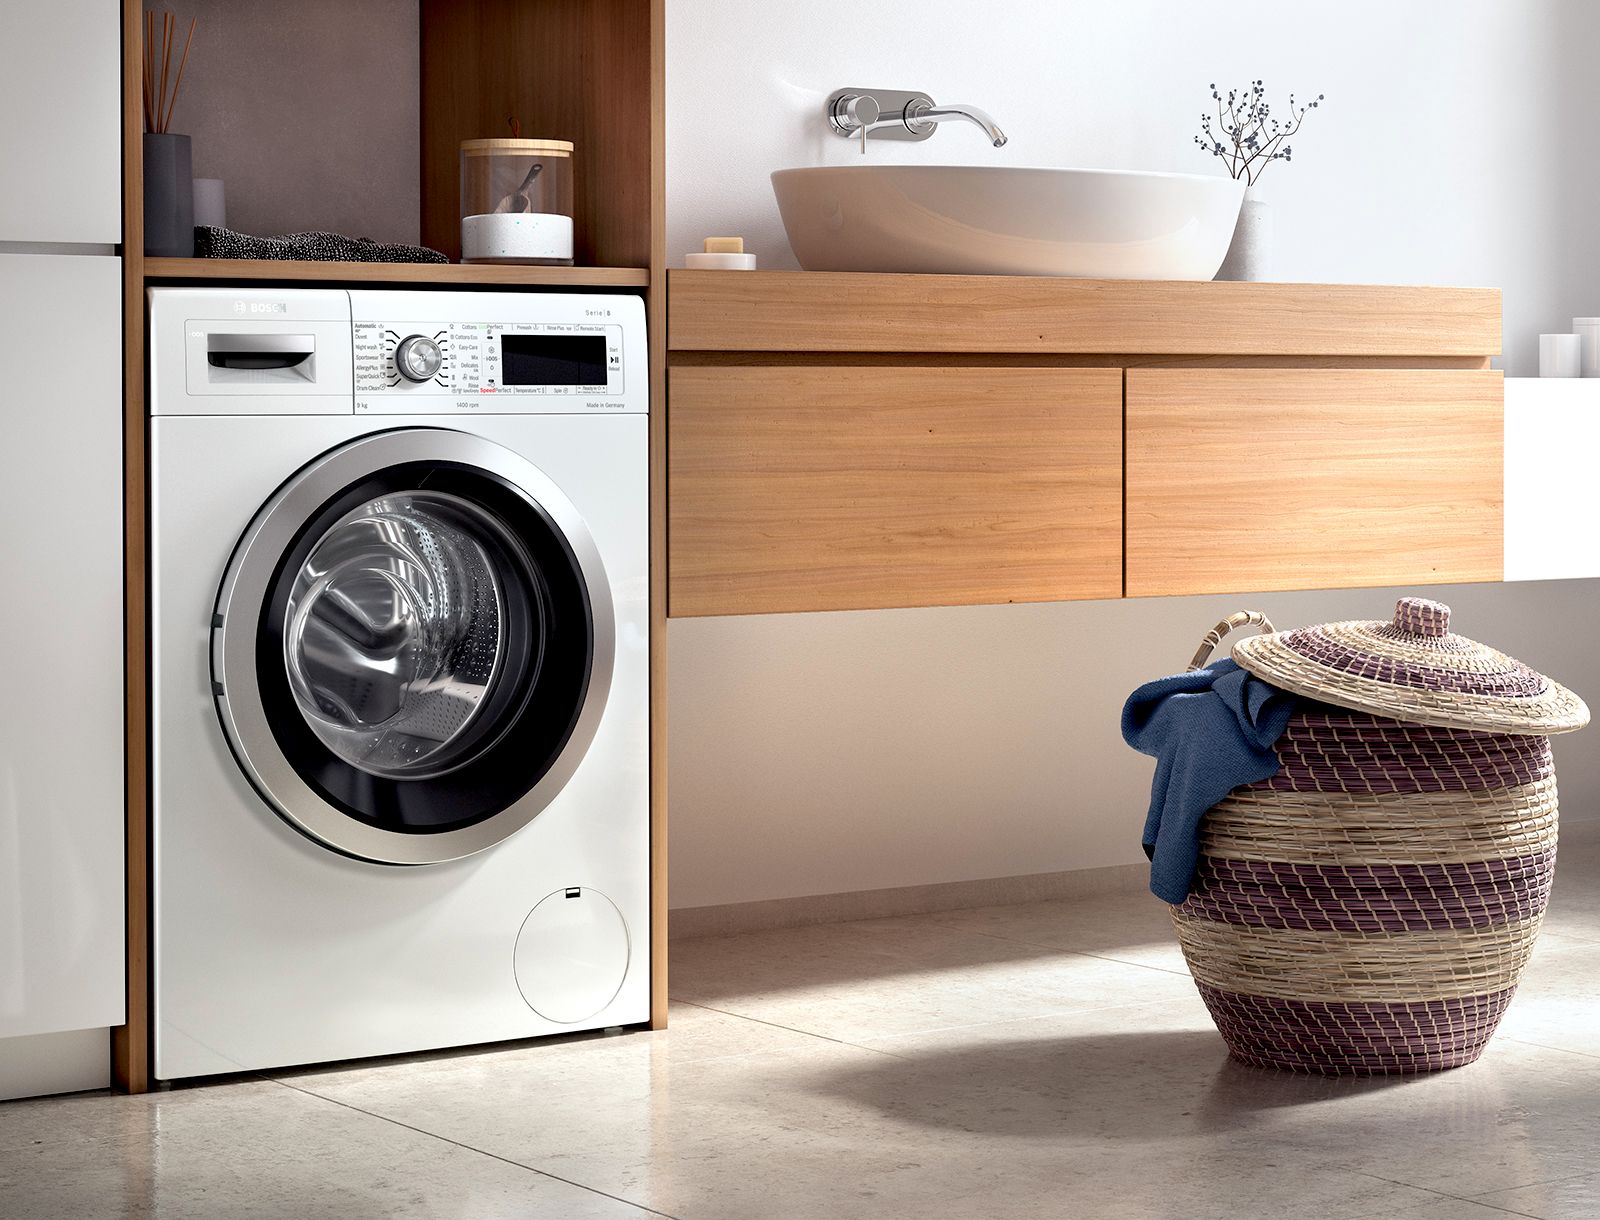 Pin By Olga On Bathrooms Home Appliances Home Washing Machine